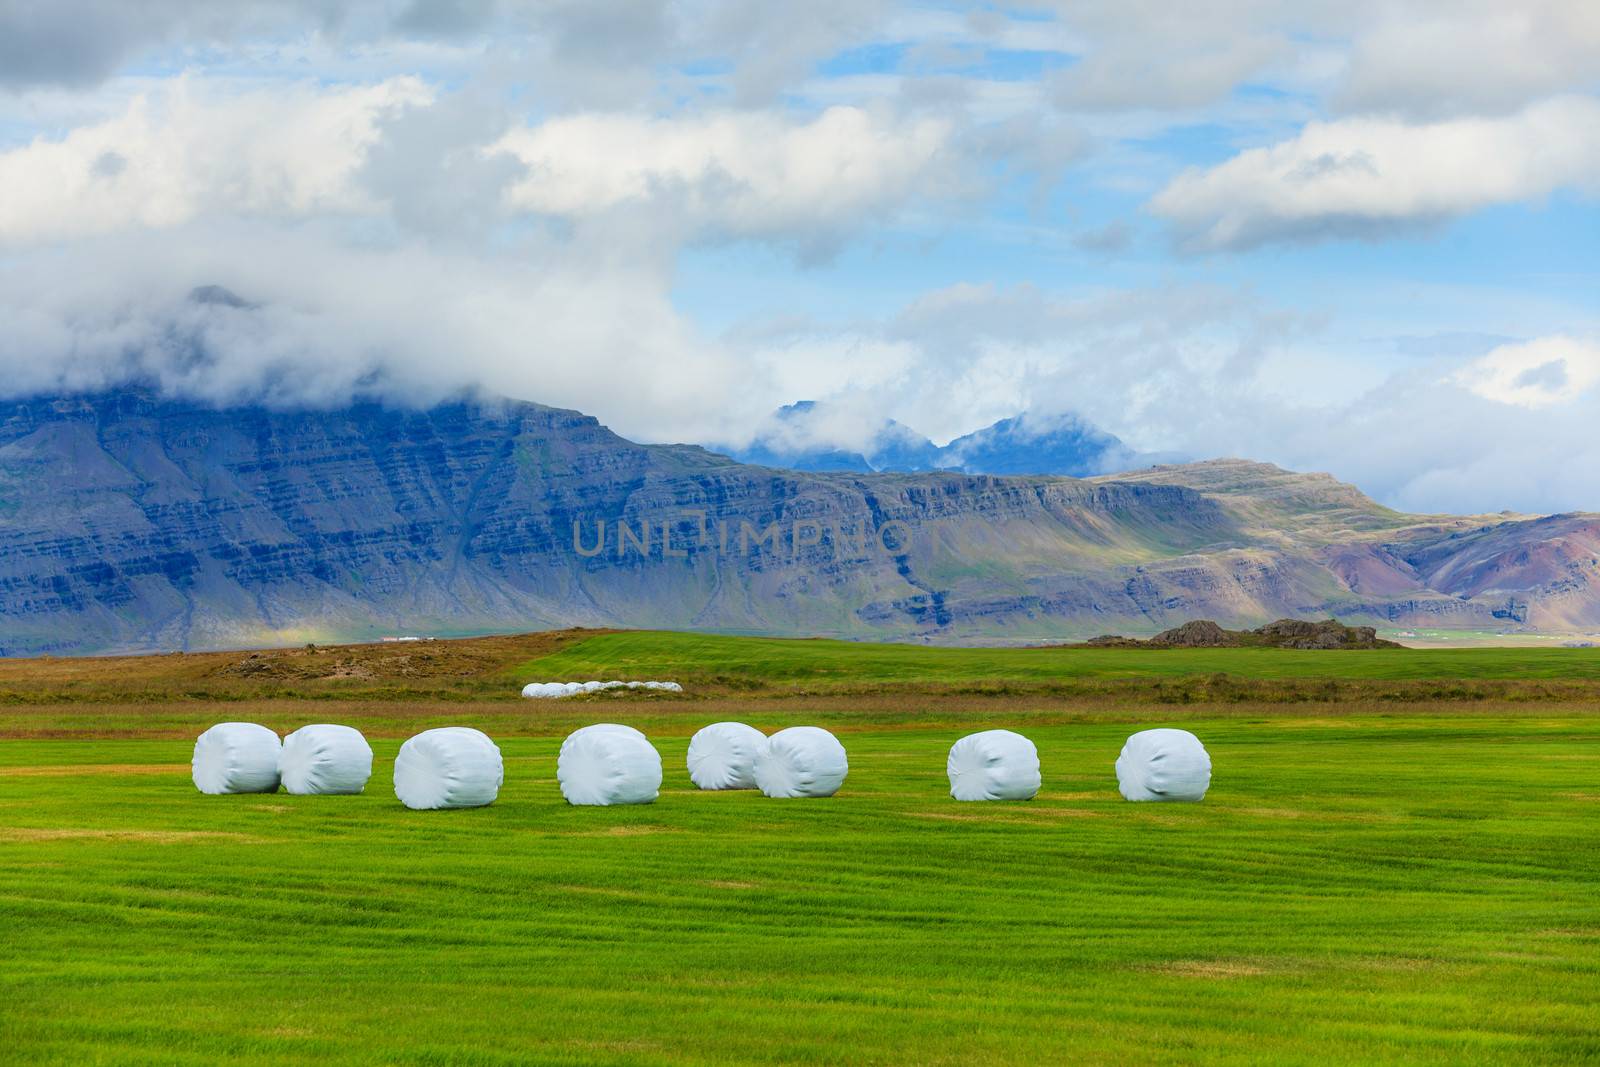 Icelandic Rural Landscape. by maxoliki